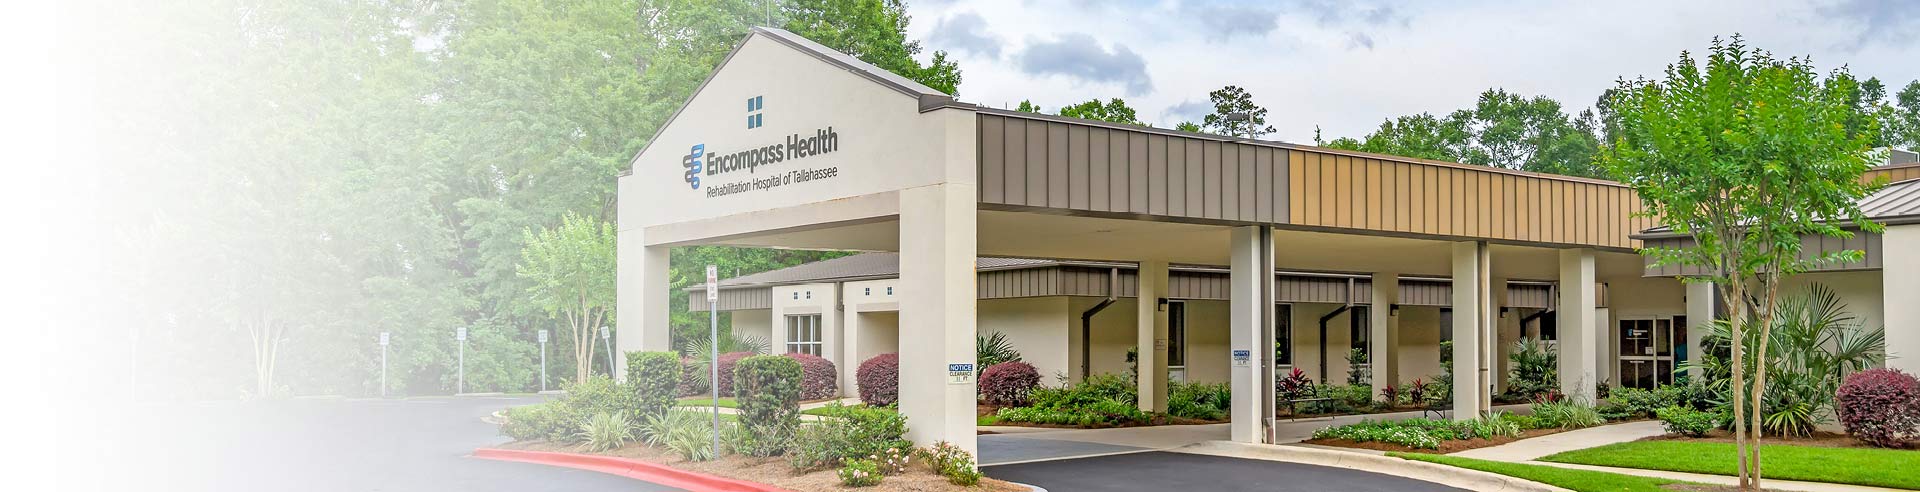  Encompass Health Rehabilitation Hospital of Tallahassee exterior image